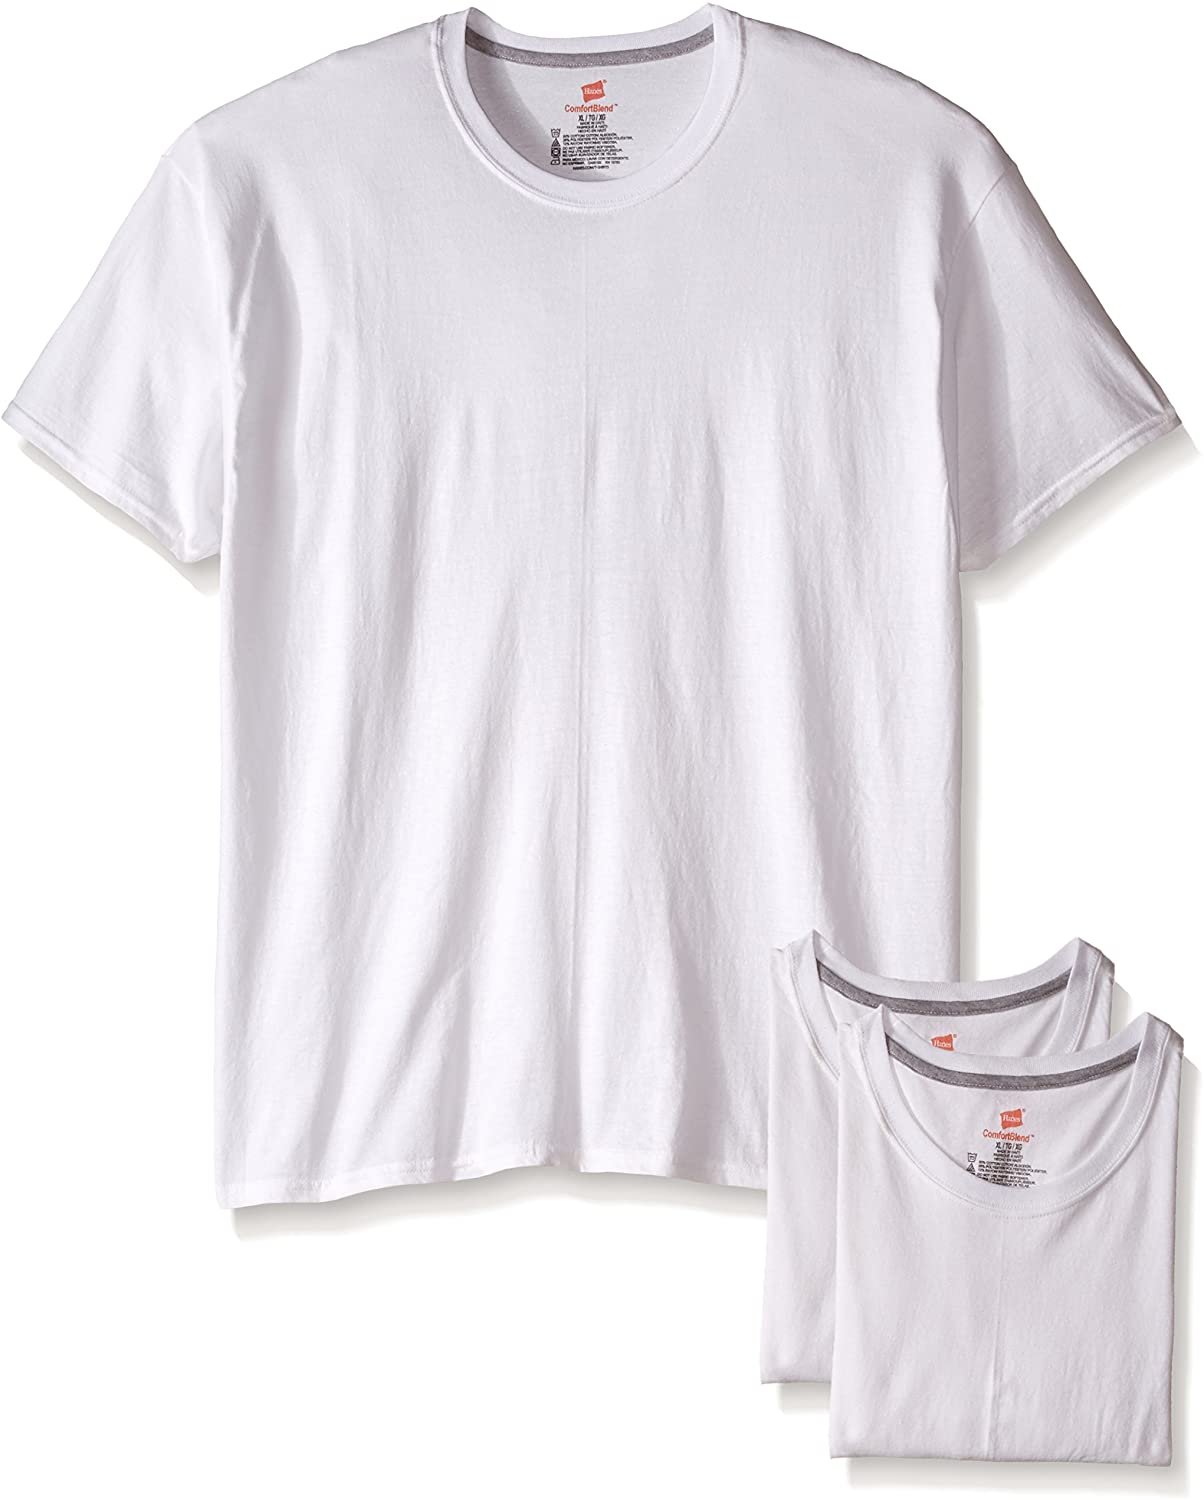 Big Men's 3 Pack Comfortblend White Crew T-Shirt - image 1 of 1